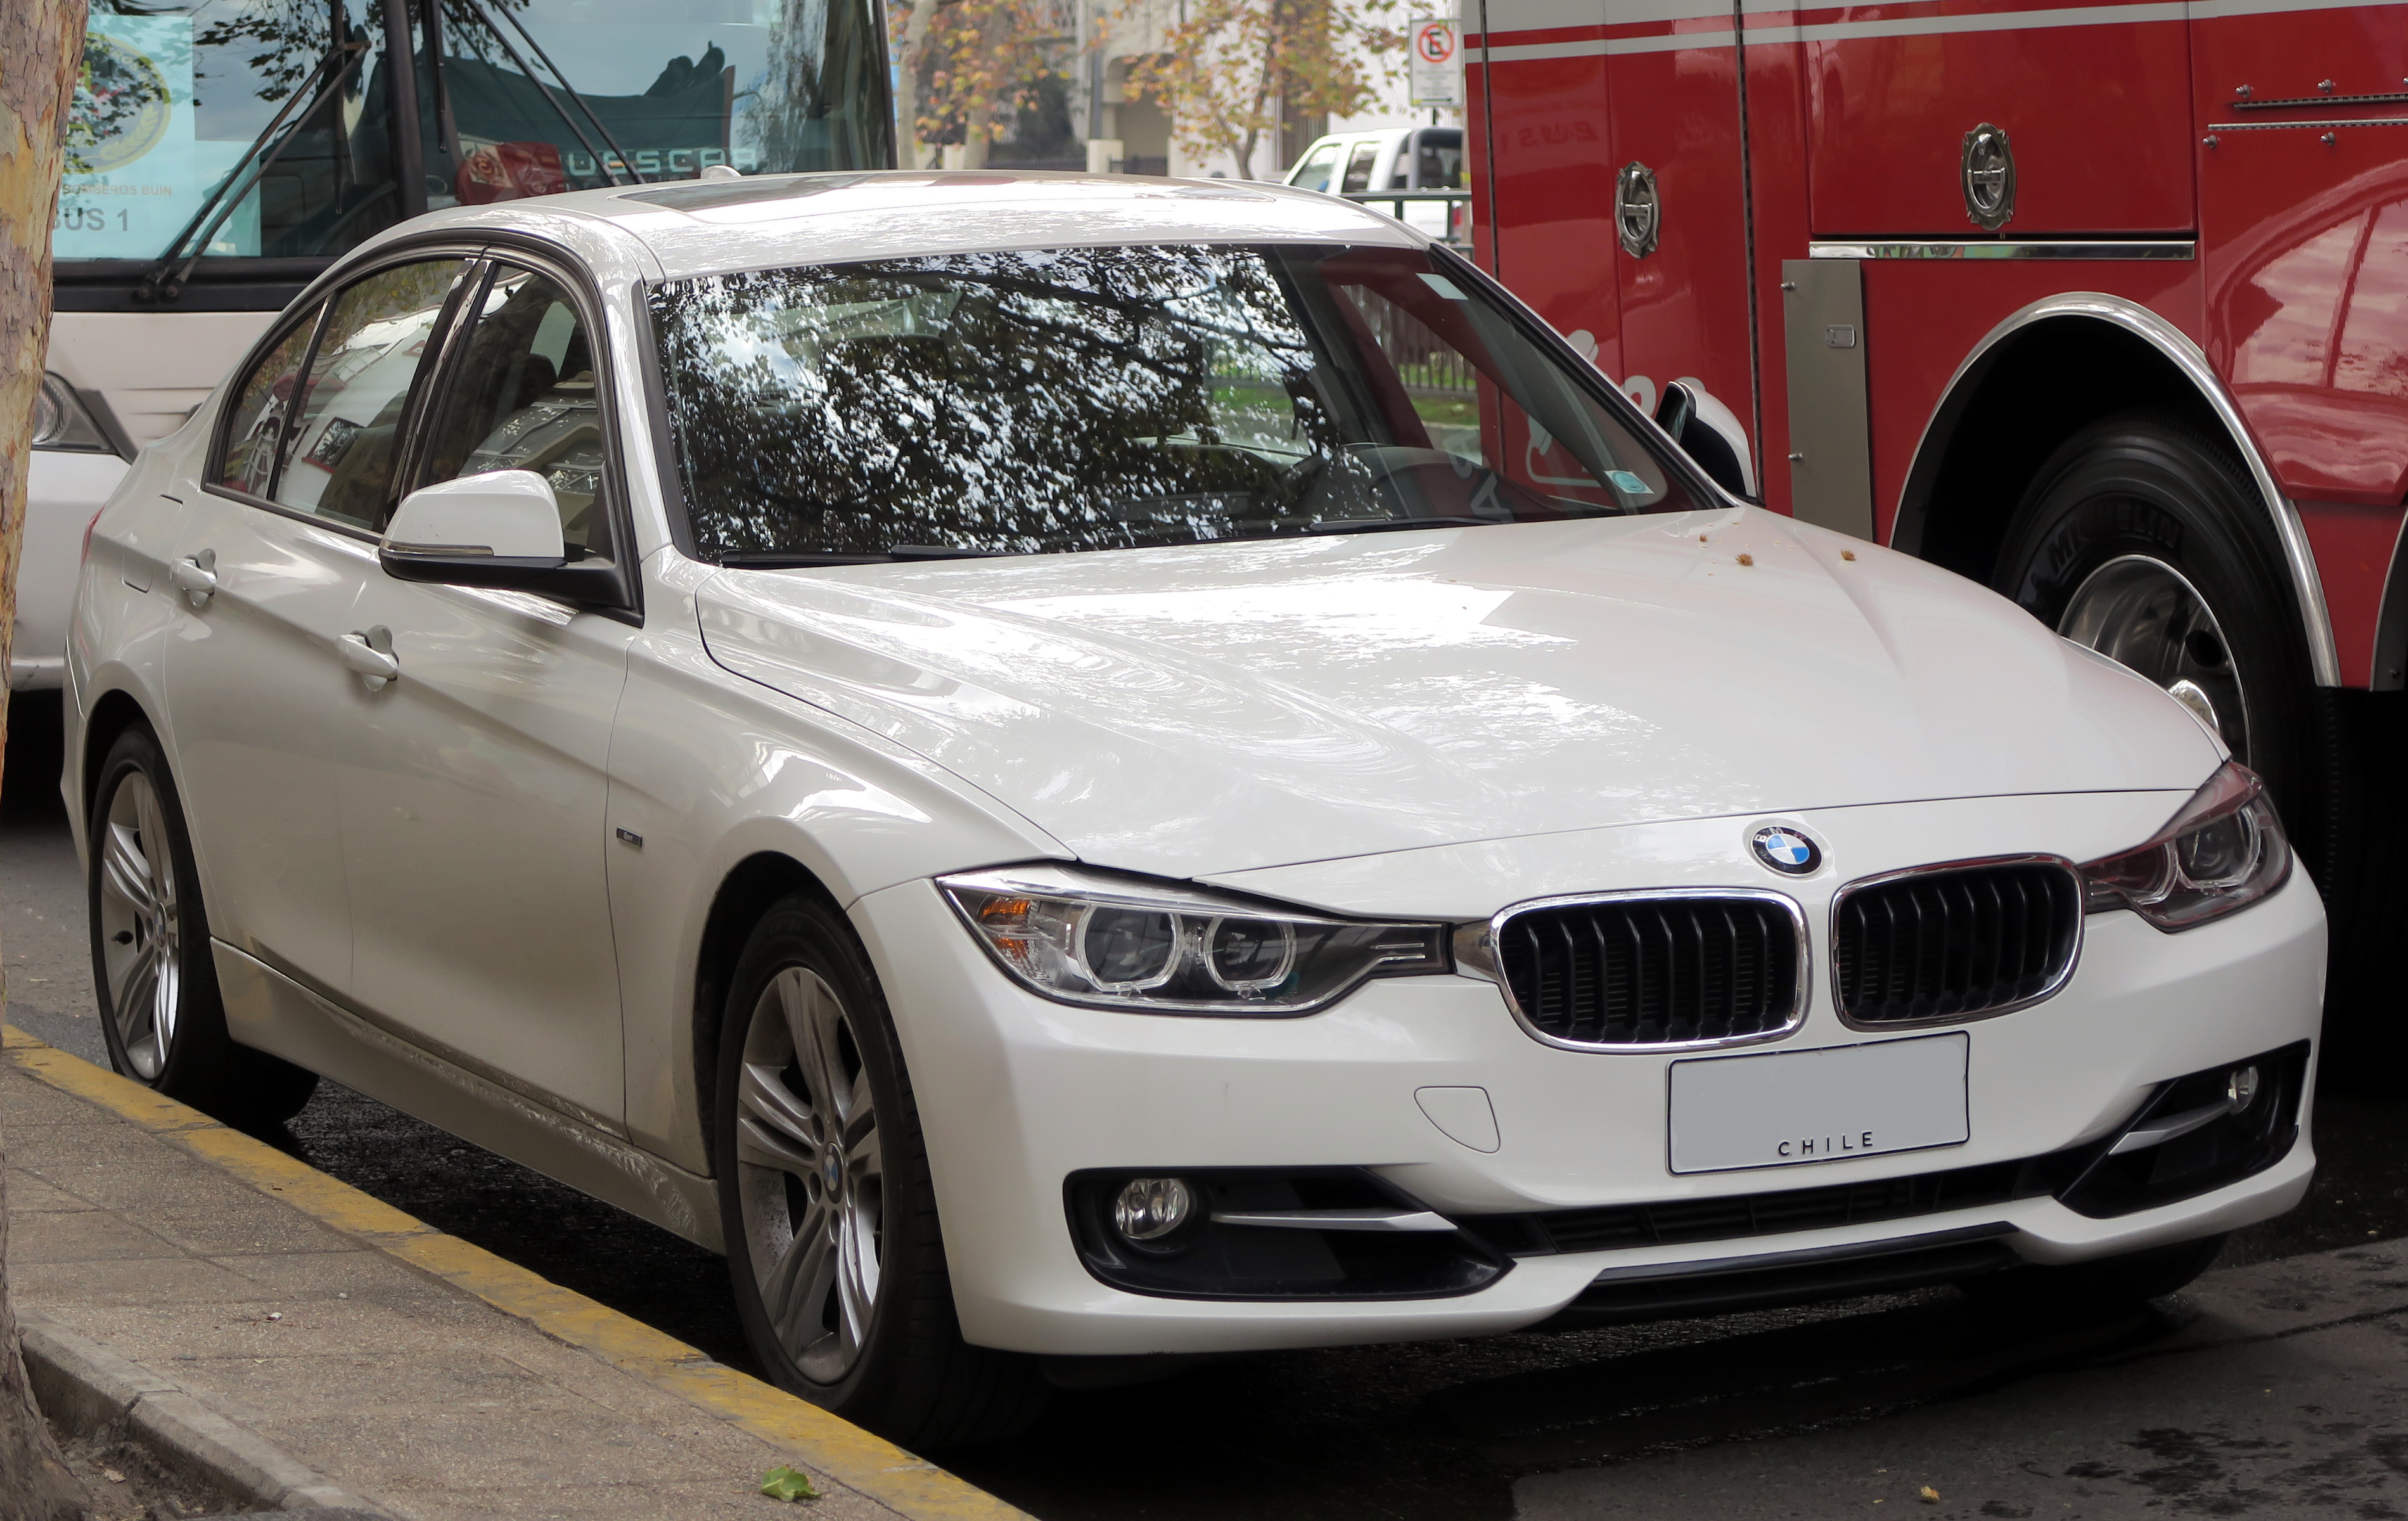 File:BMW 320i Sport 2013 (34995432135).jpg - Wikimedia Commons